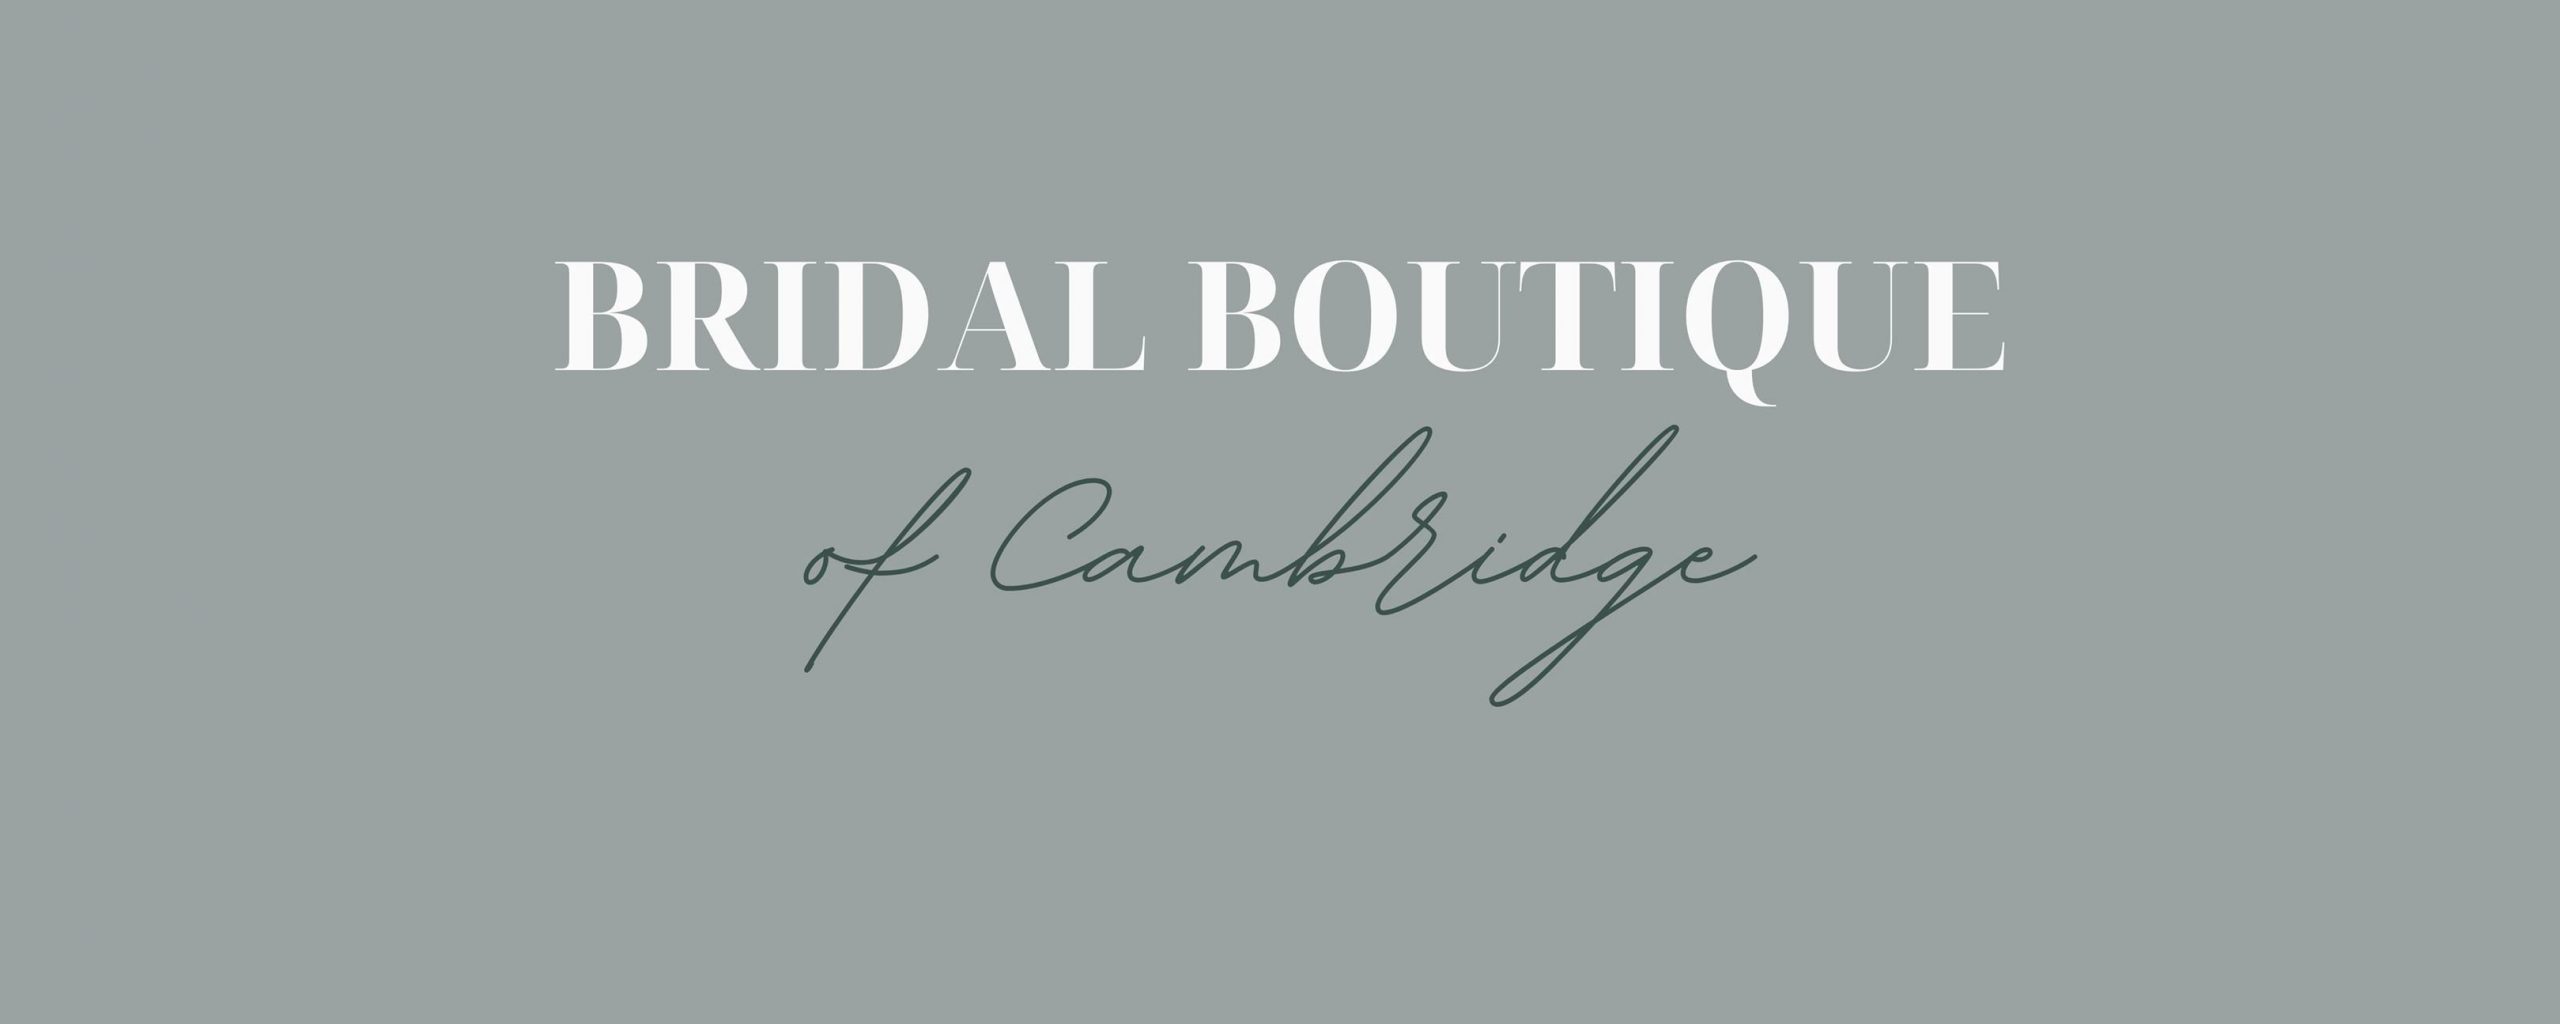 BridalBoutique Cambridge